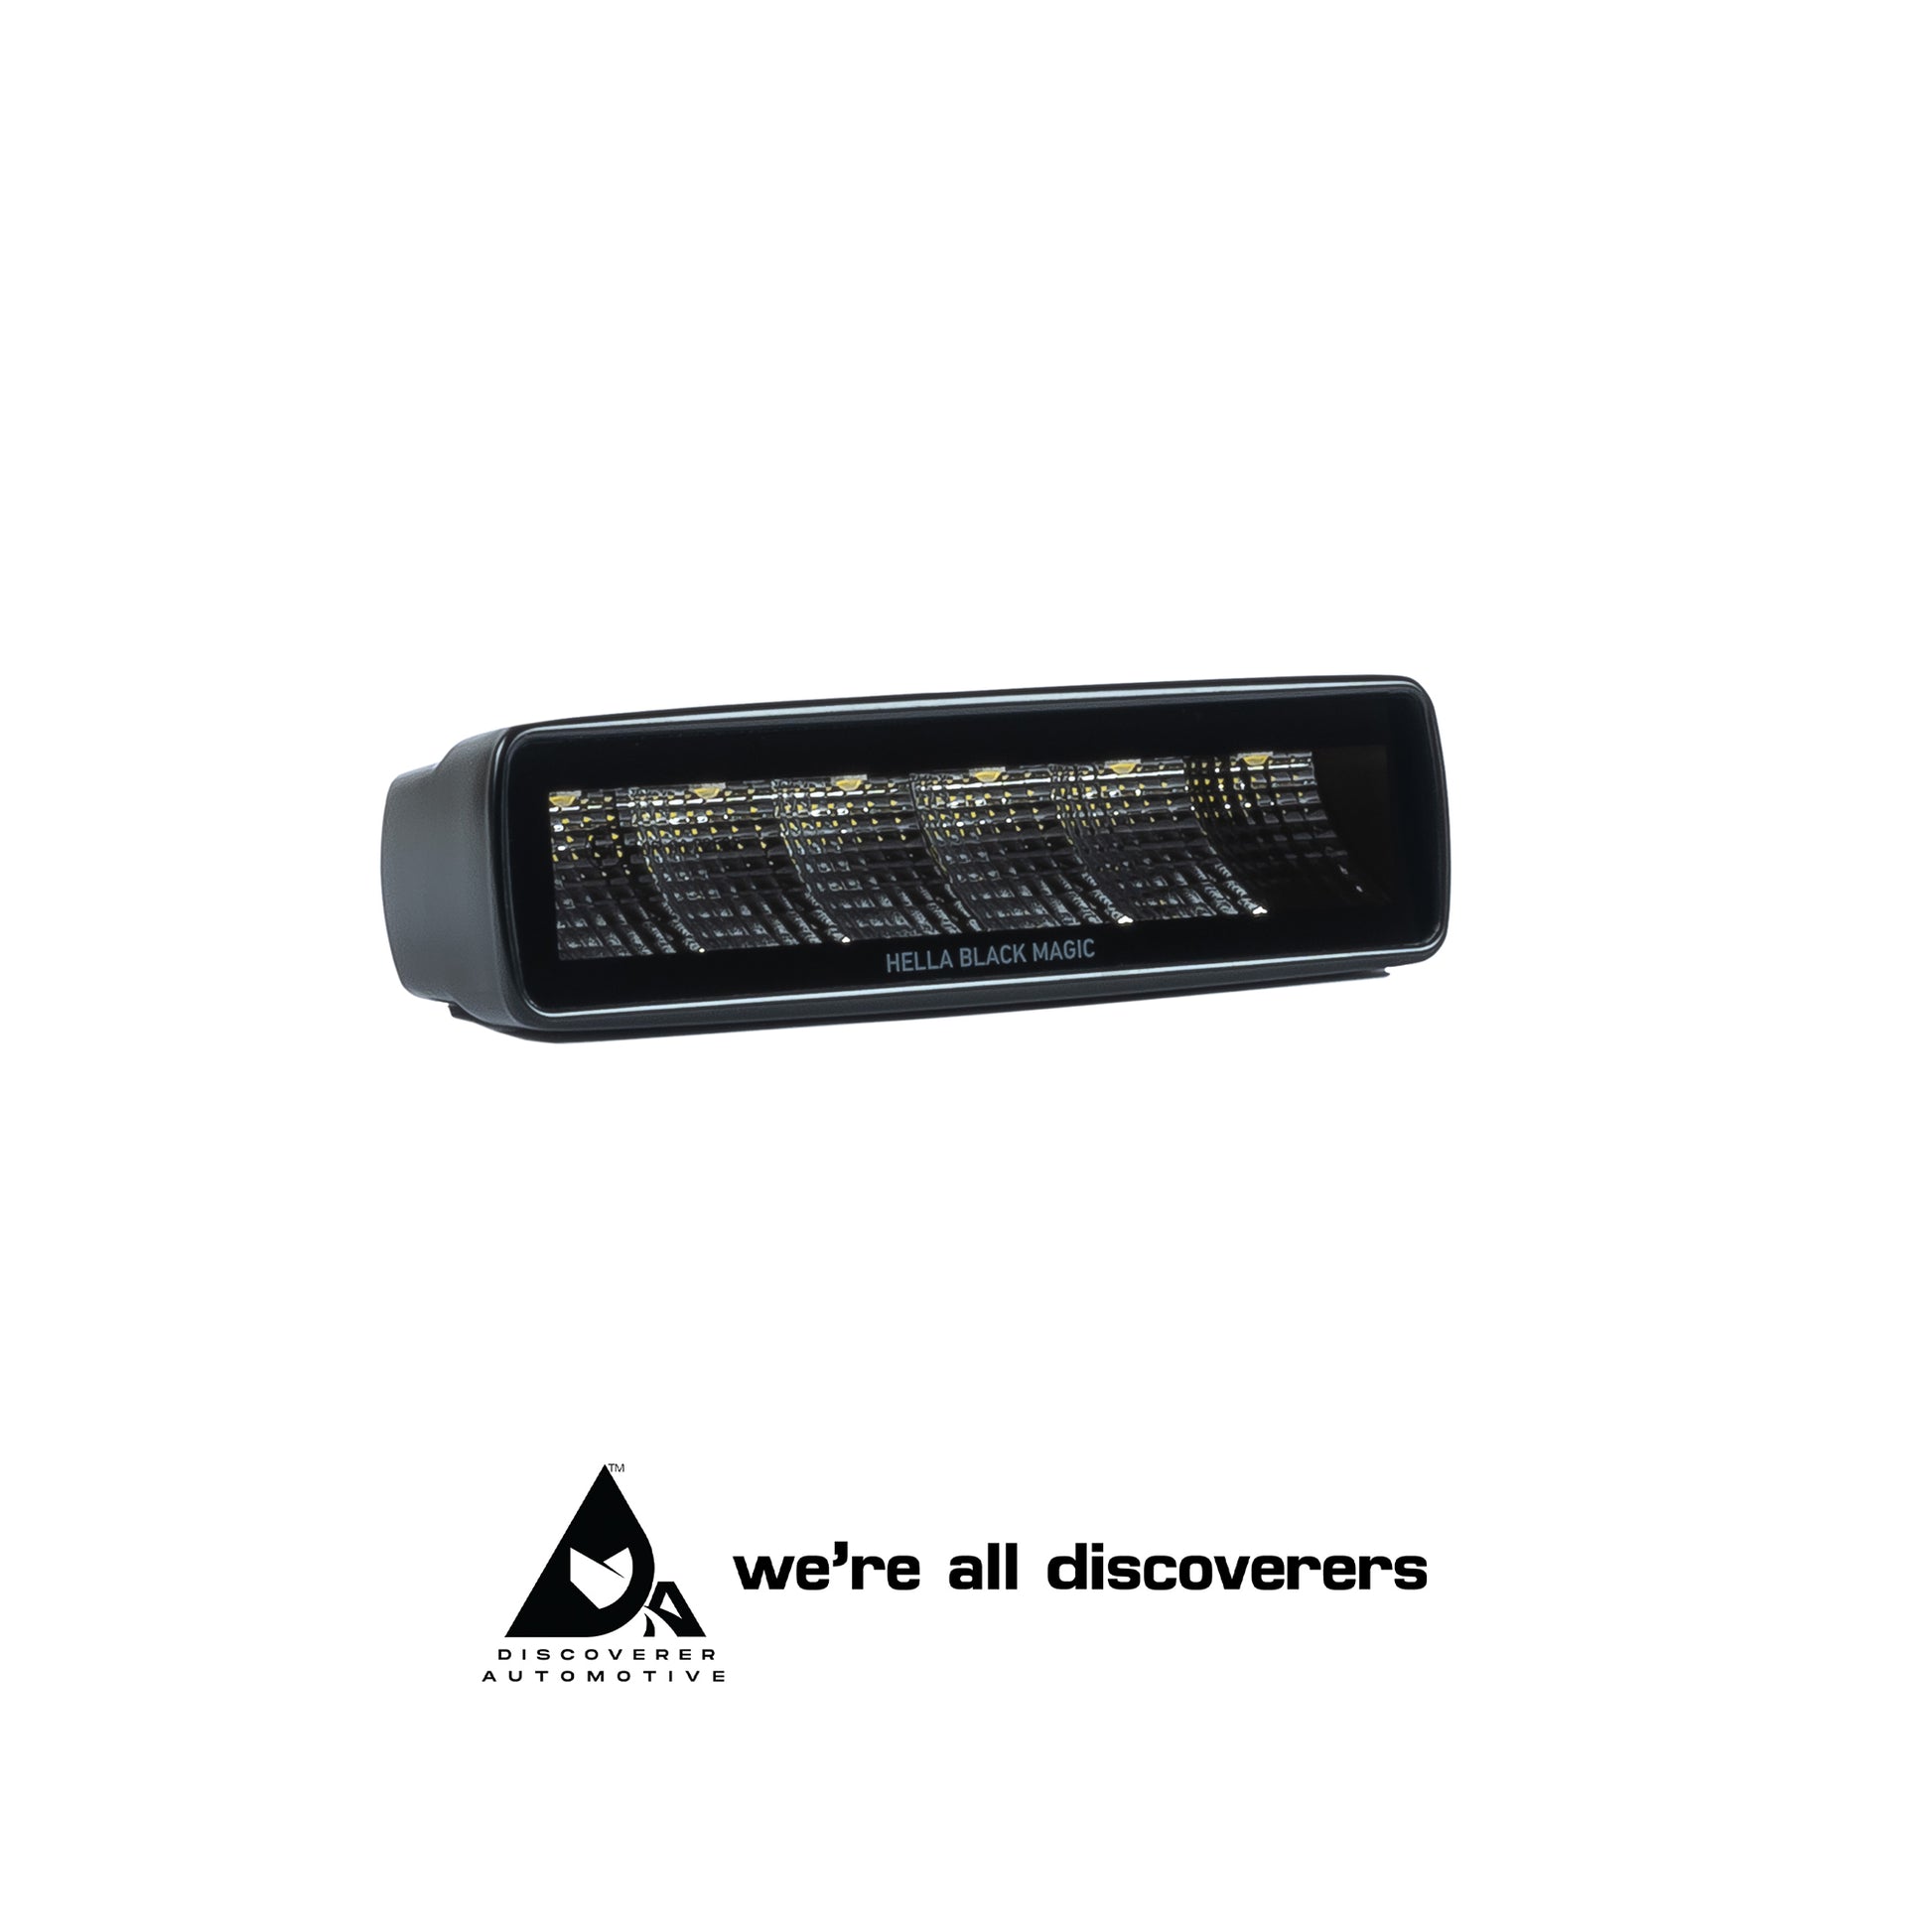 HELLA BLACK MAGIC 6.2 FLOOD BEAM Mini Light Bar – Discoverer